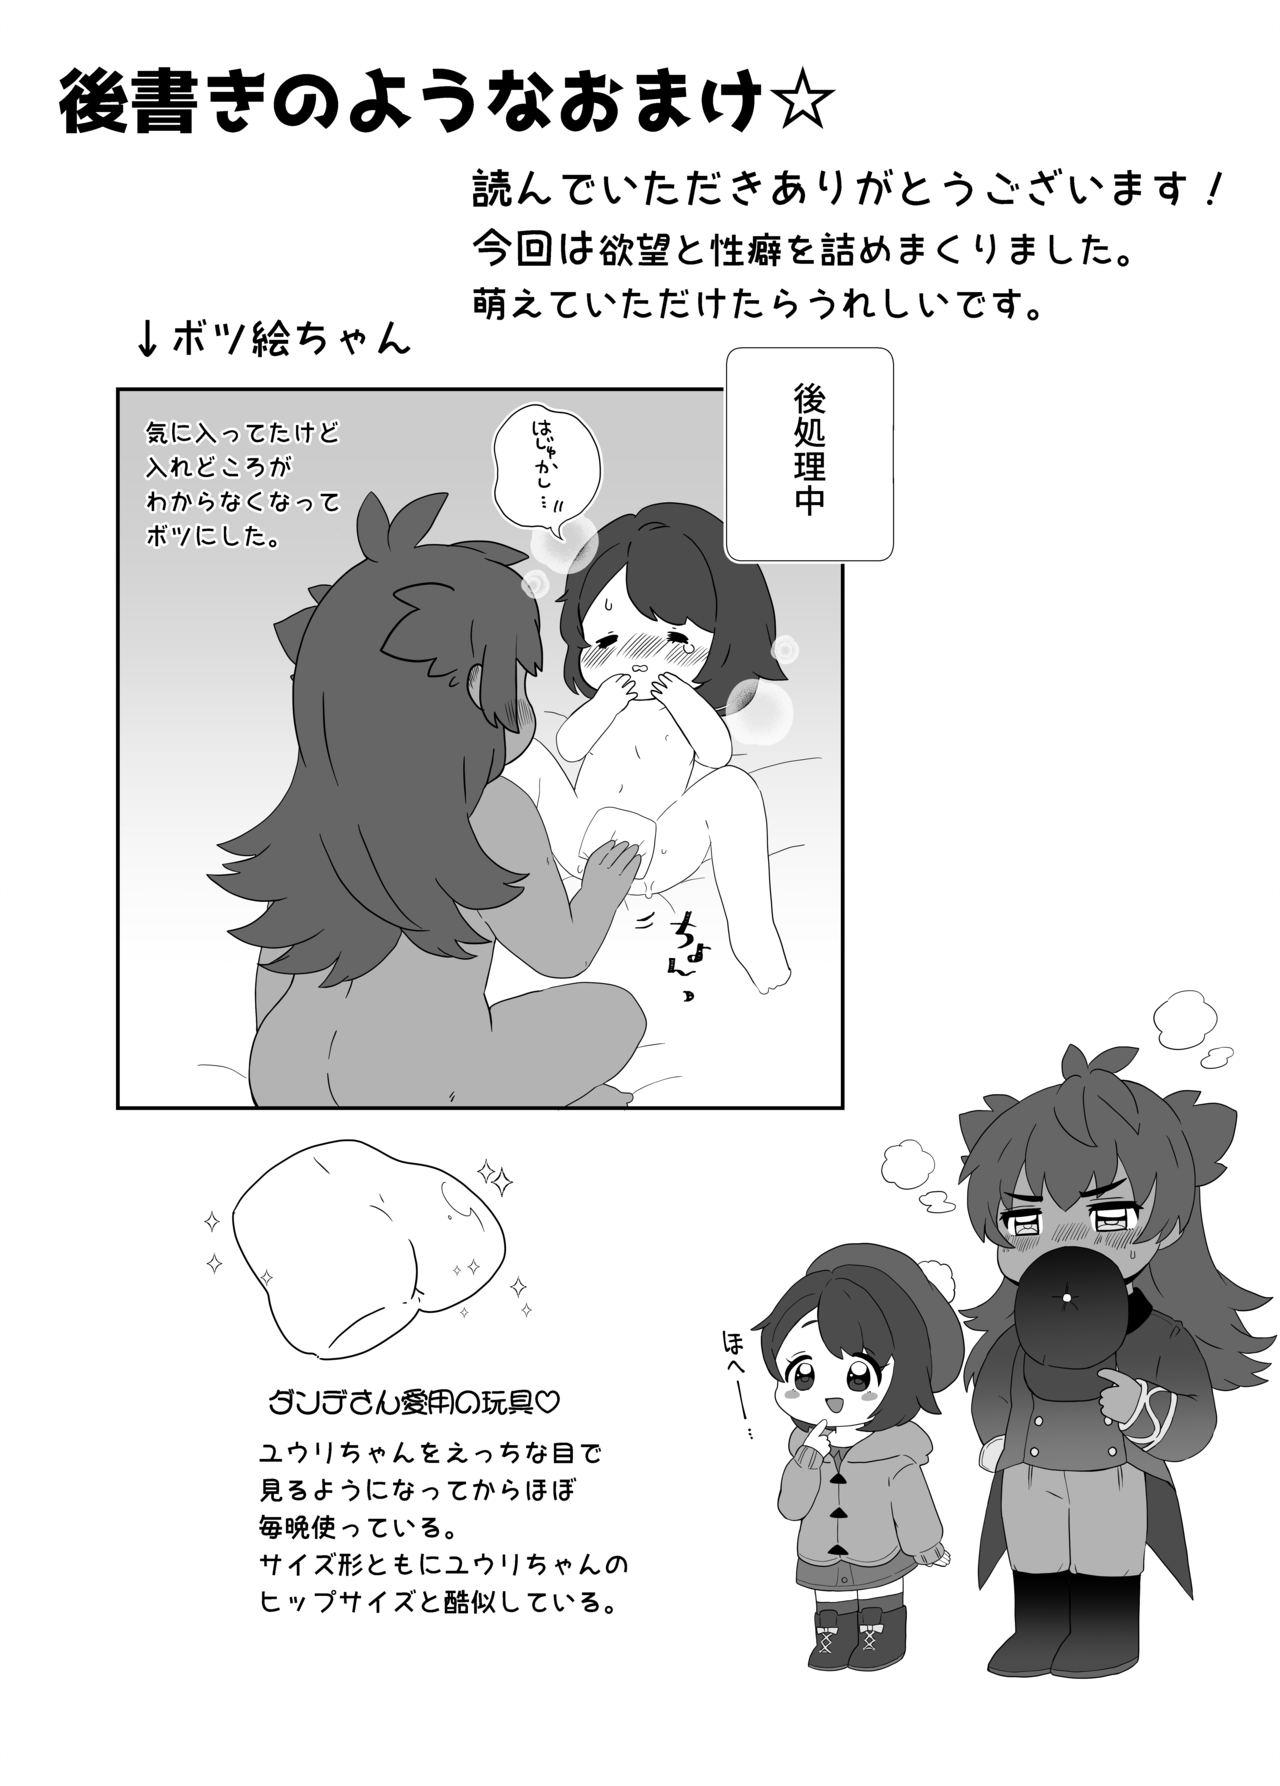 Old Daisukidakara Daijoubu! - Pokemon | pocket monsters Small - Page 19